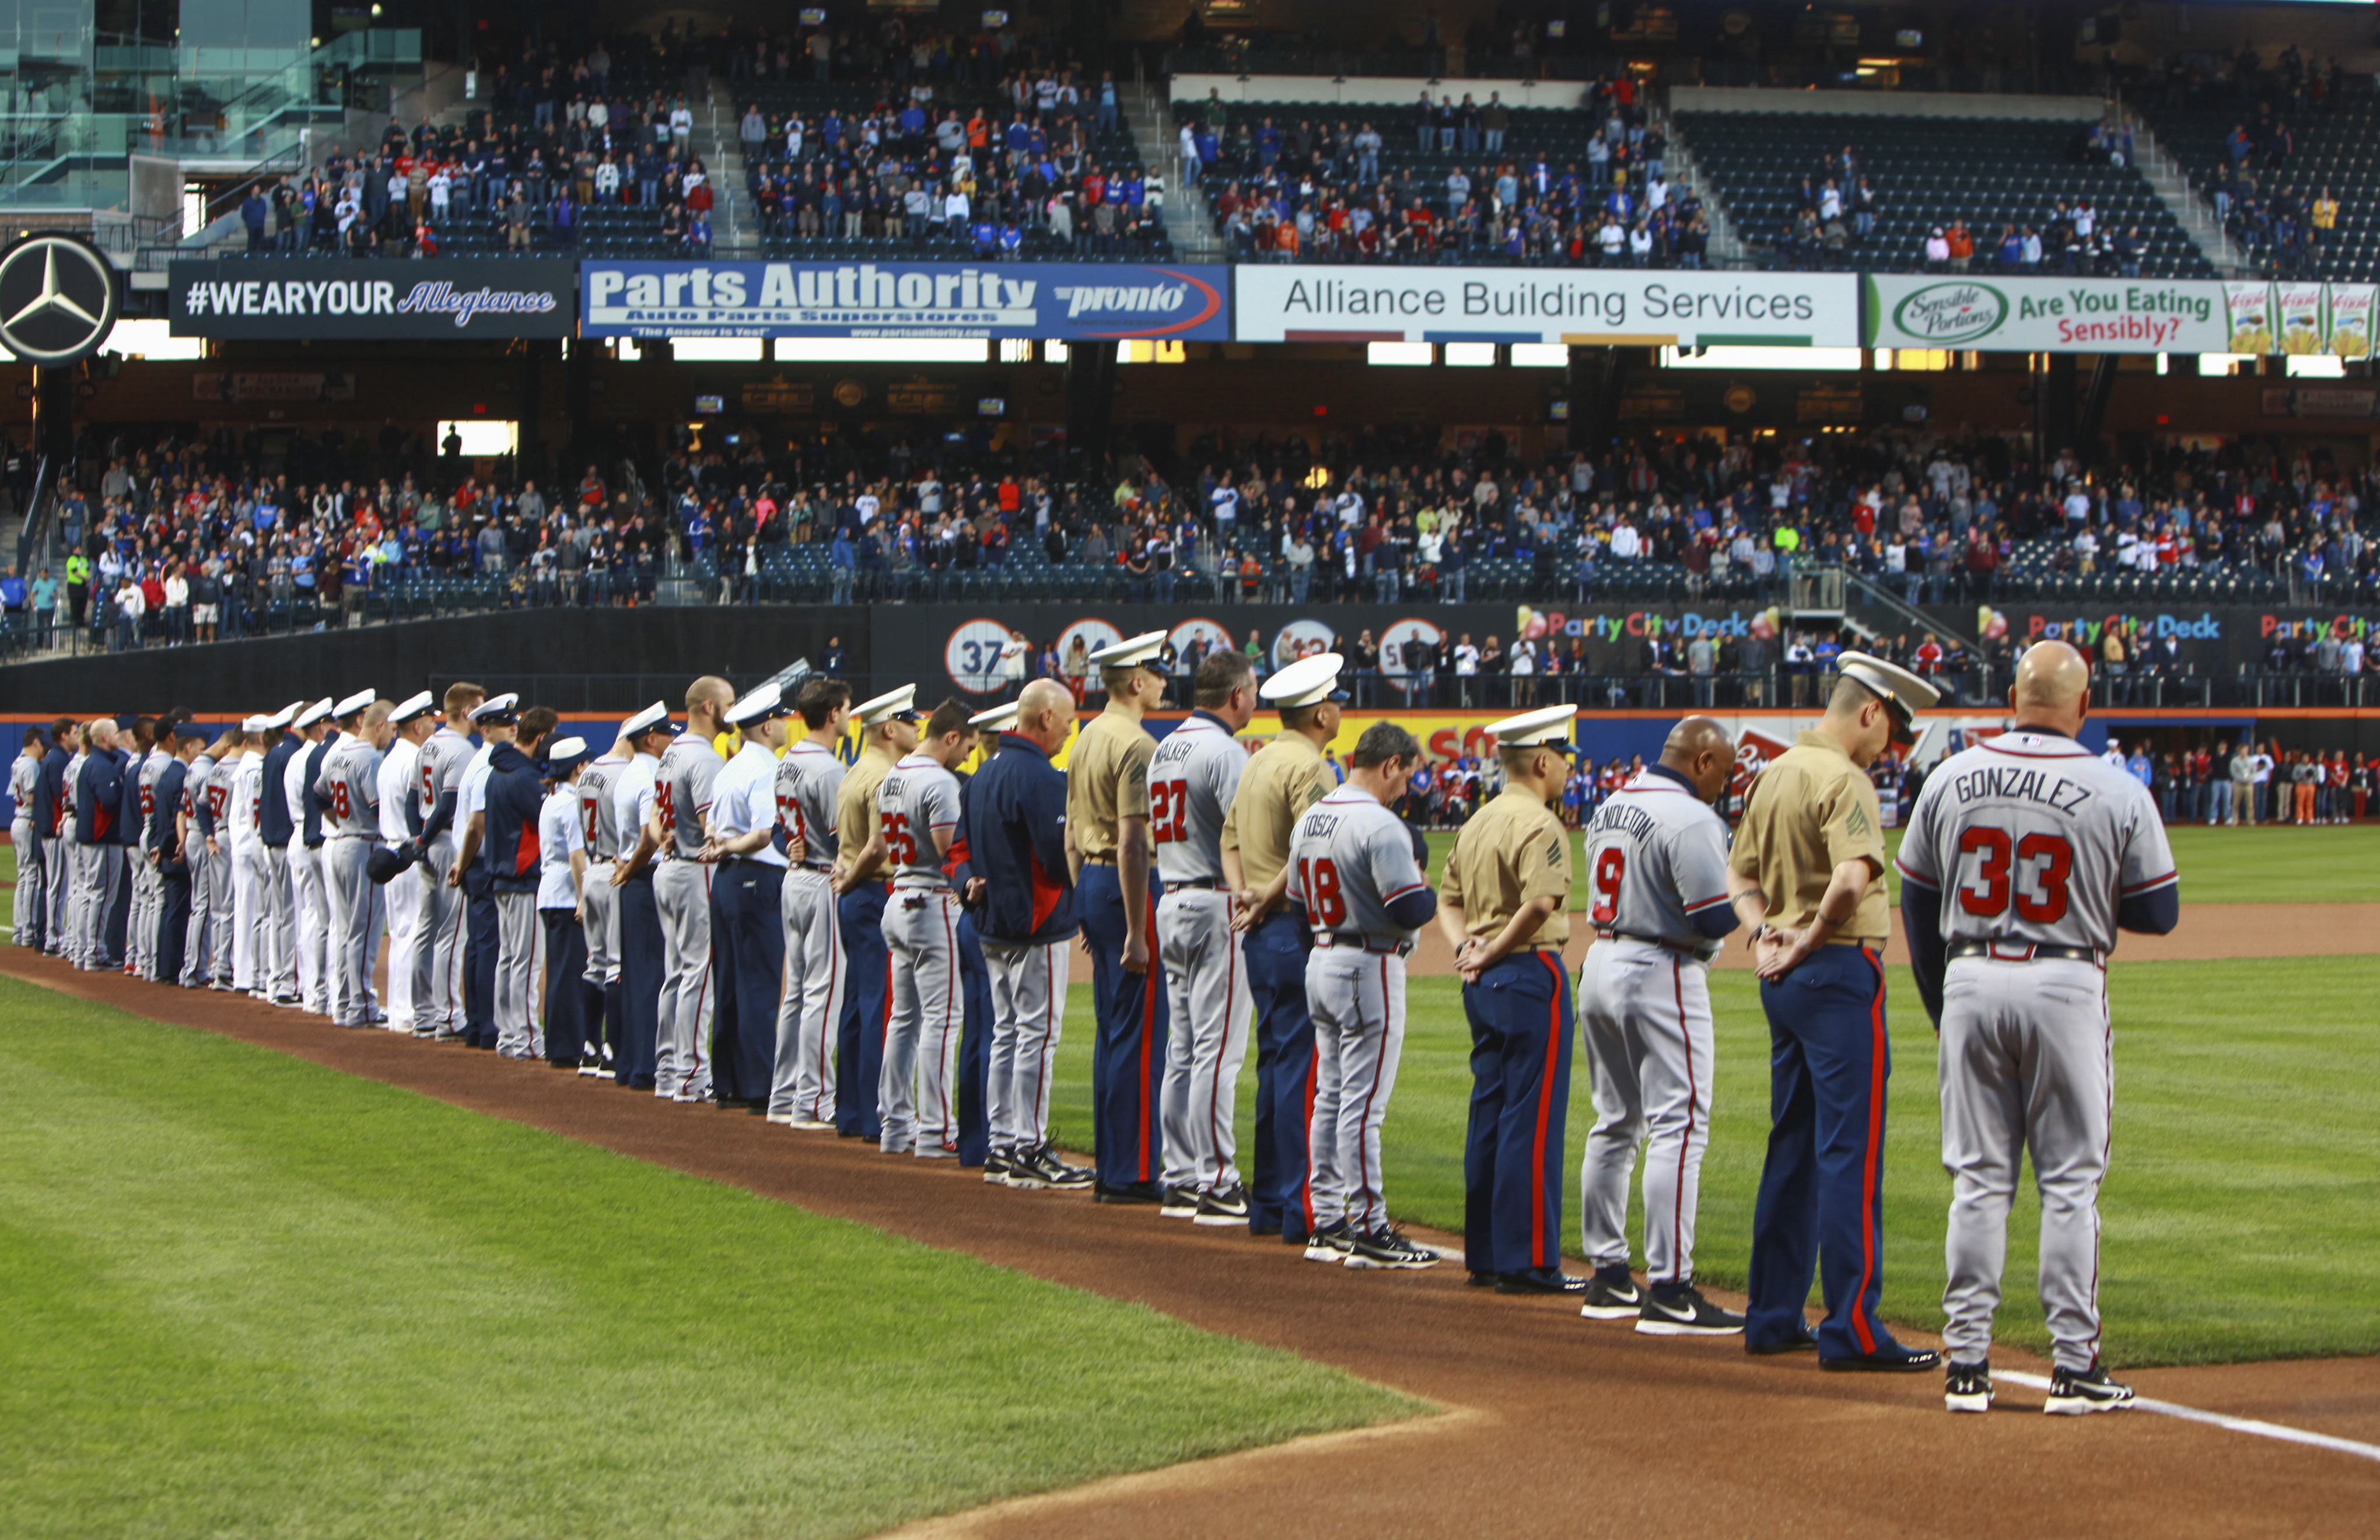 File:Mets Military Appreciation (Image 7 of 10).jpg - Wikipedia